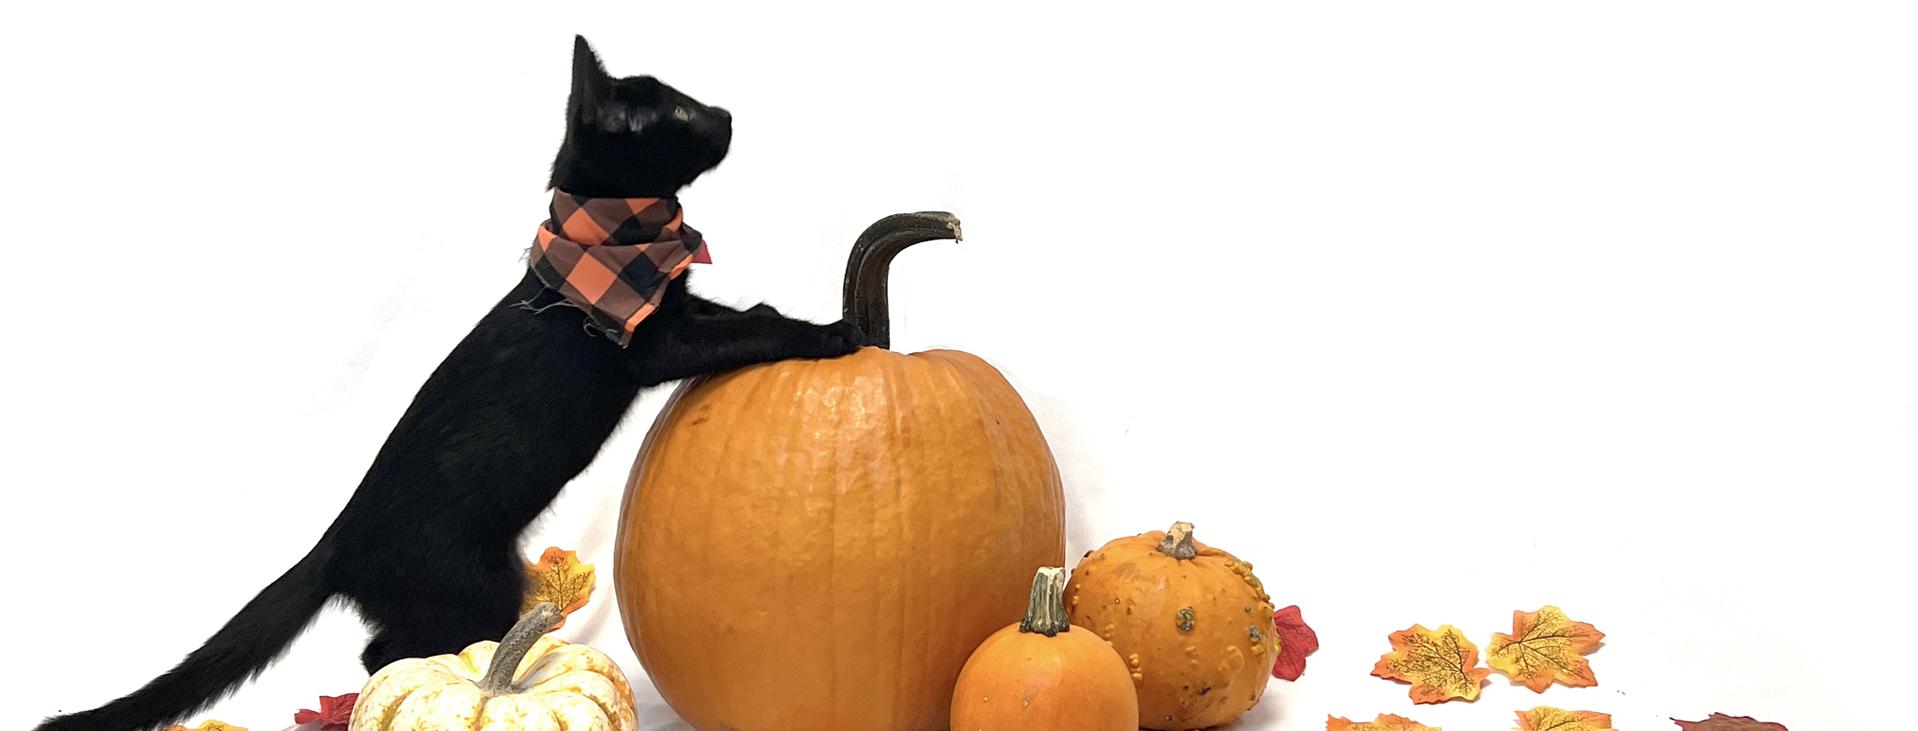 A black cat leaning on a pumpkin